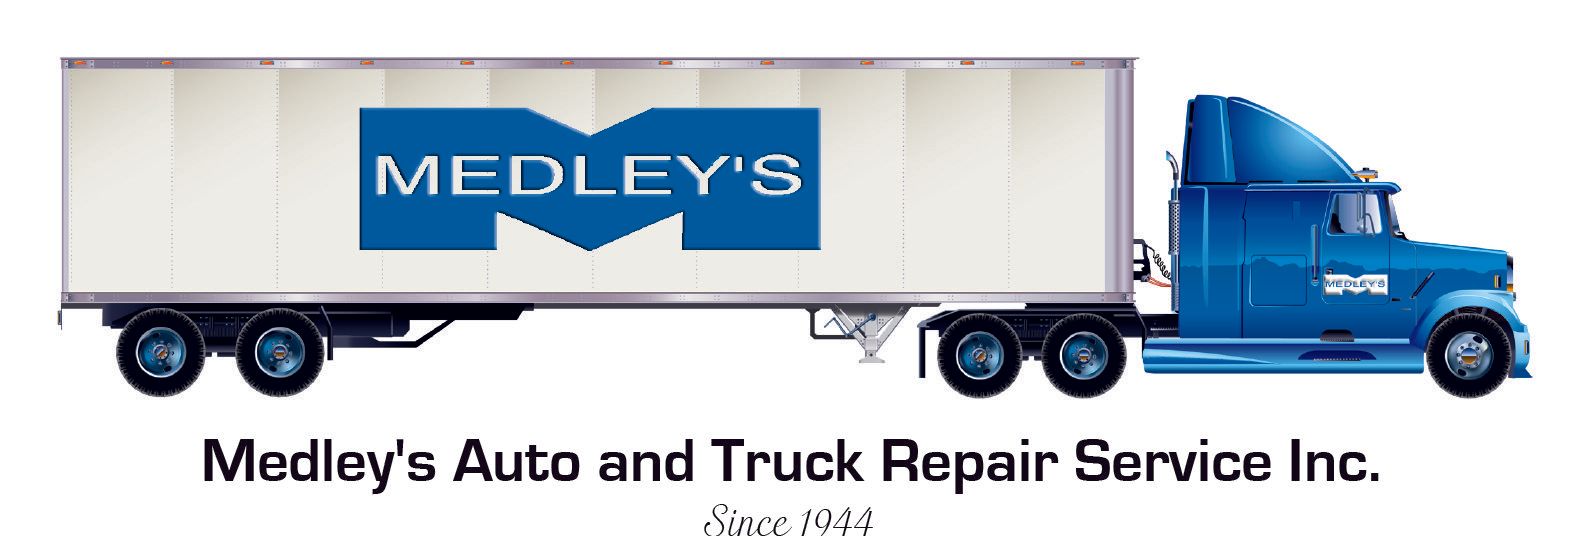 Medley's Auto & Truck Repair Service logo